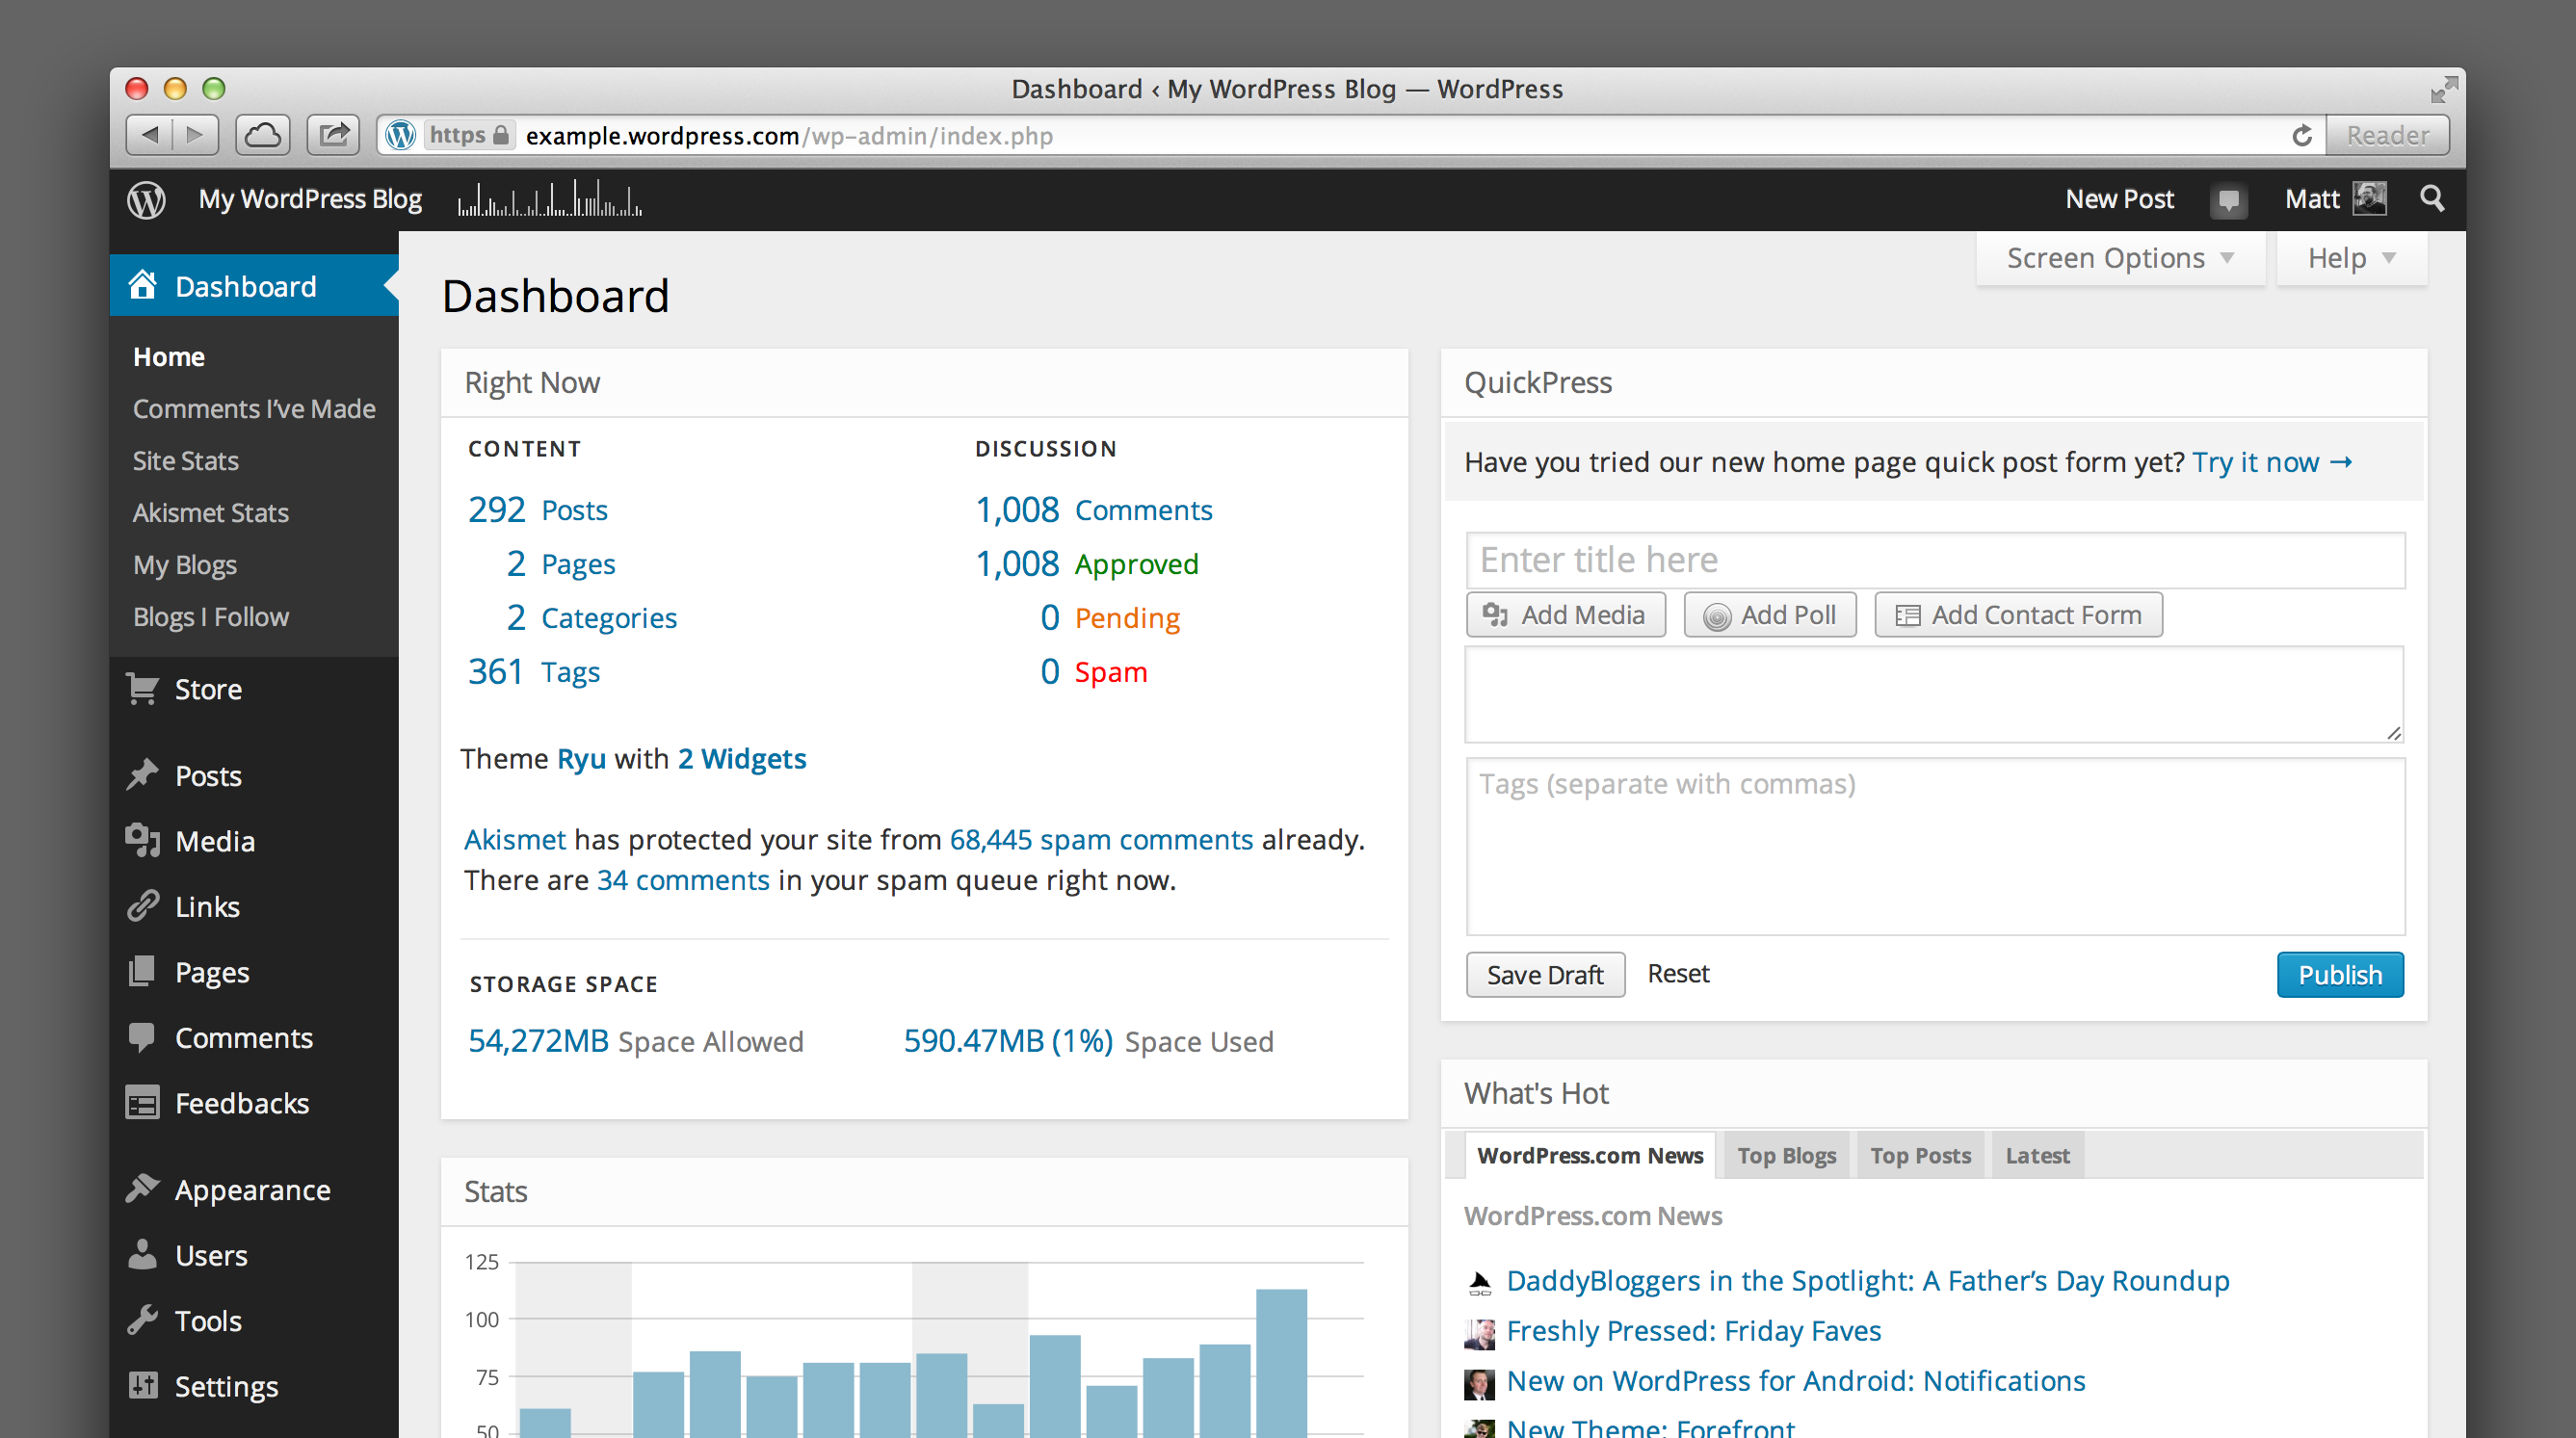 WordPress.com launches MP6 dashboard redesign